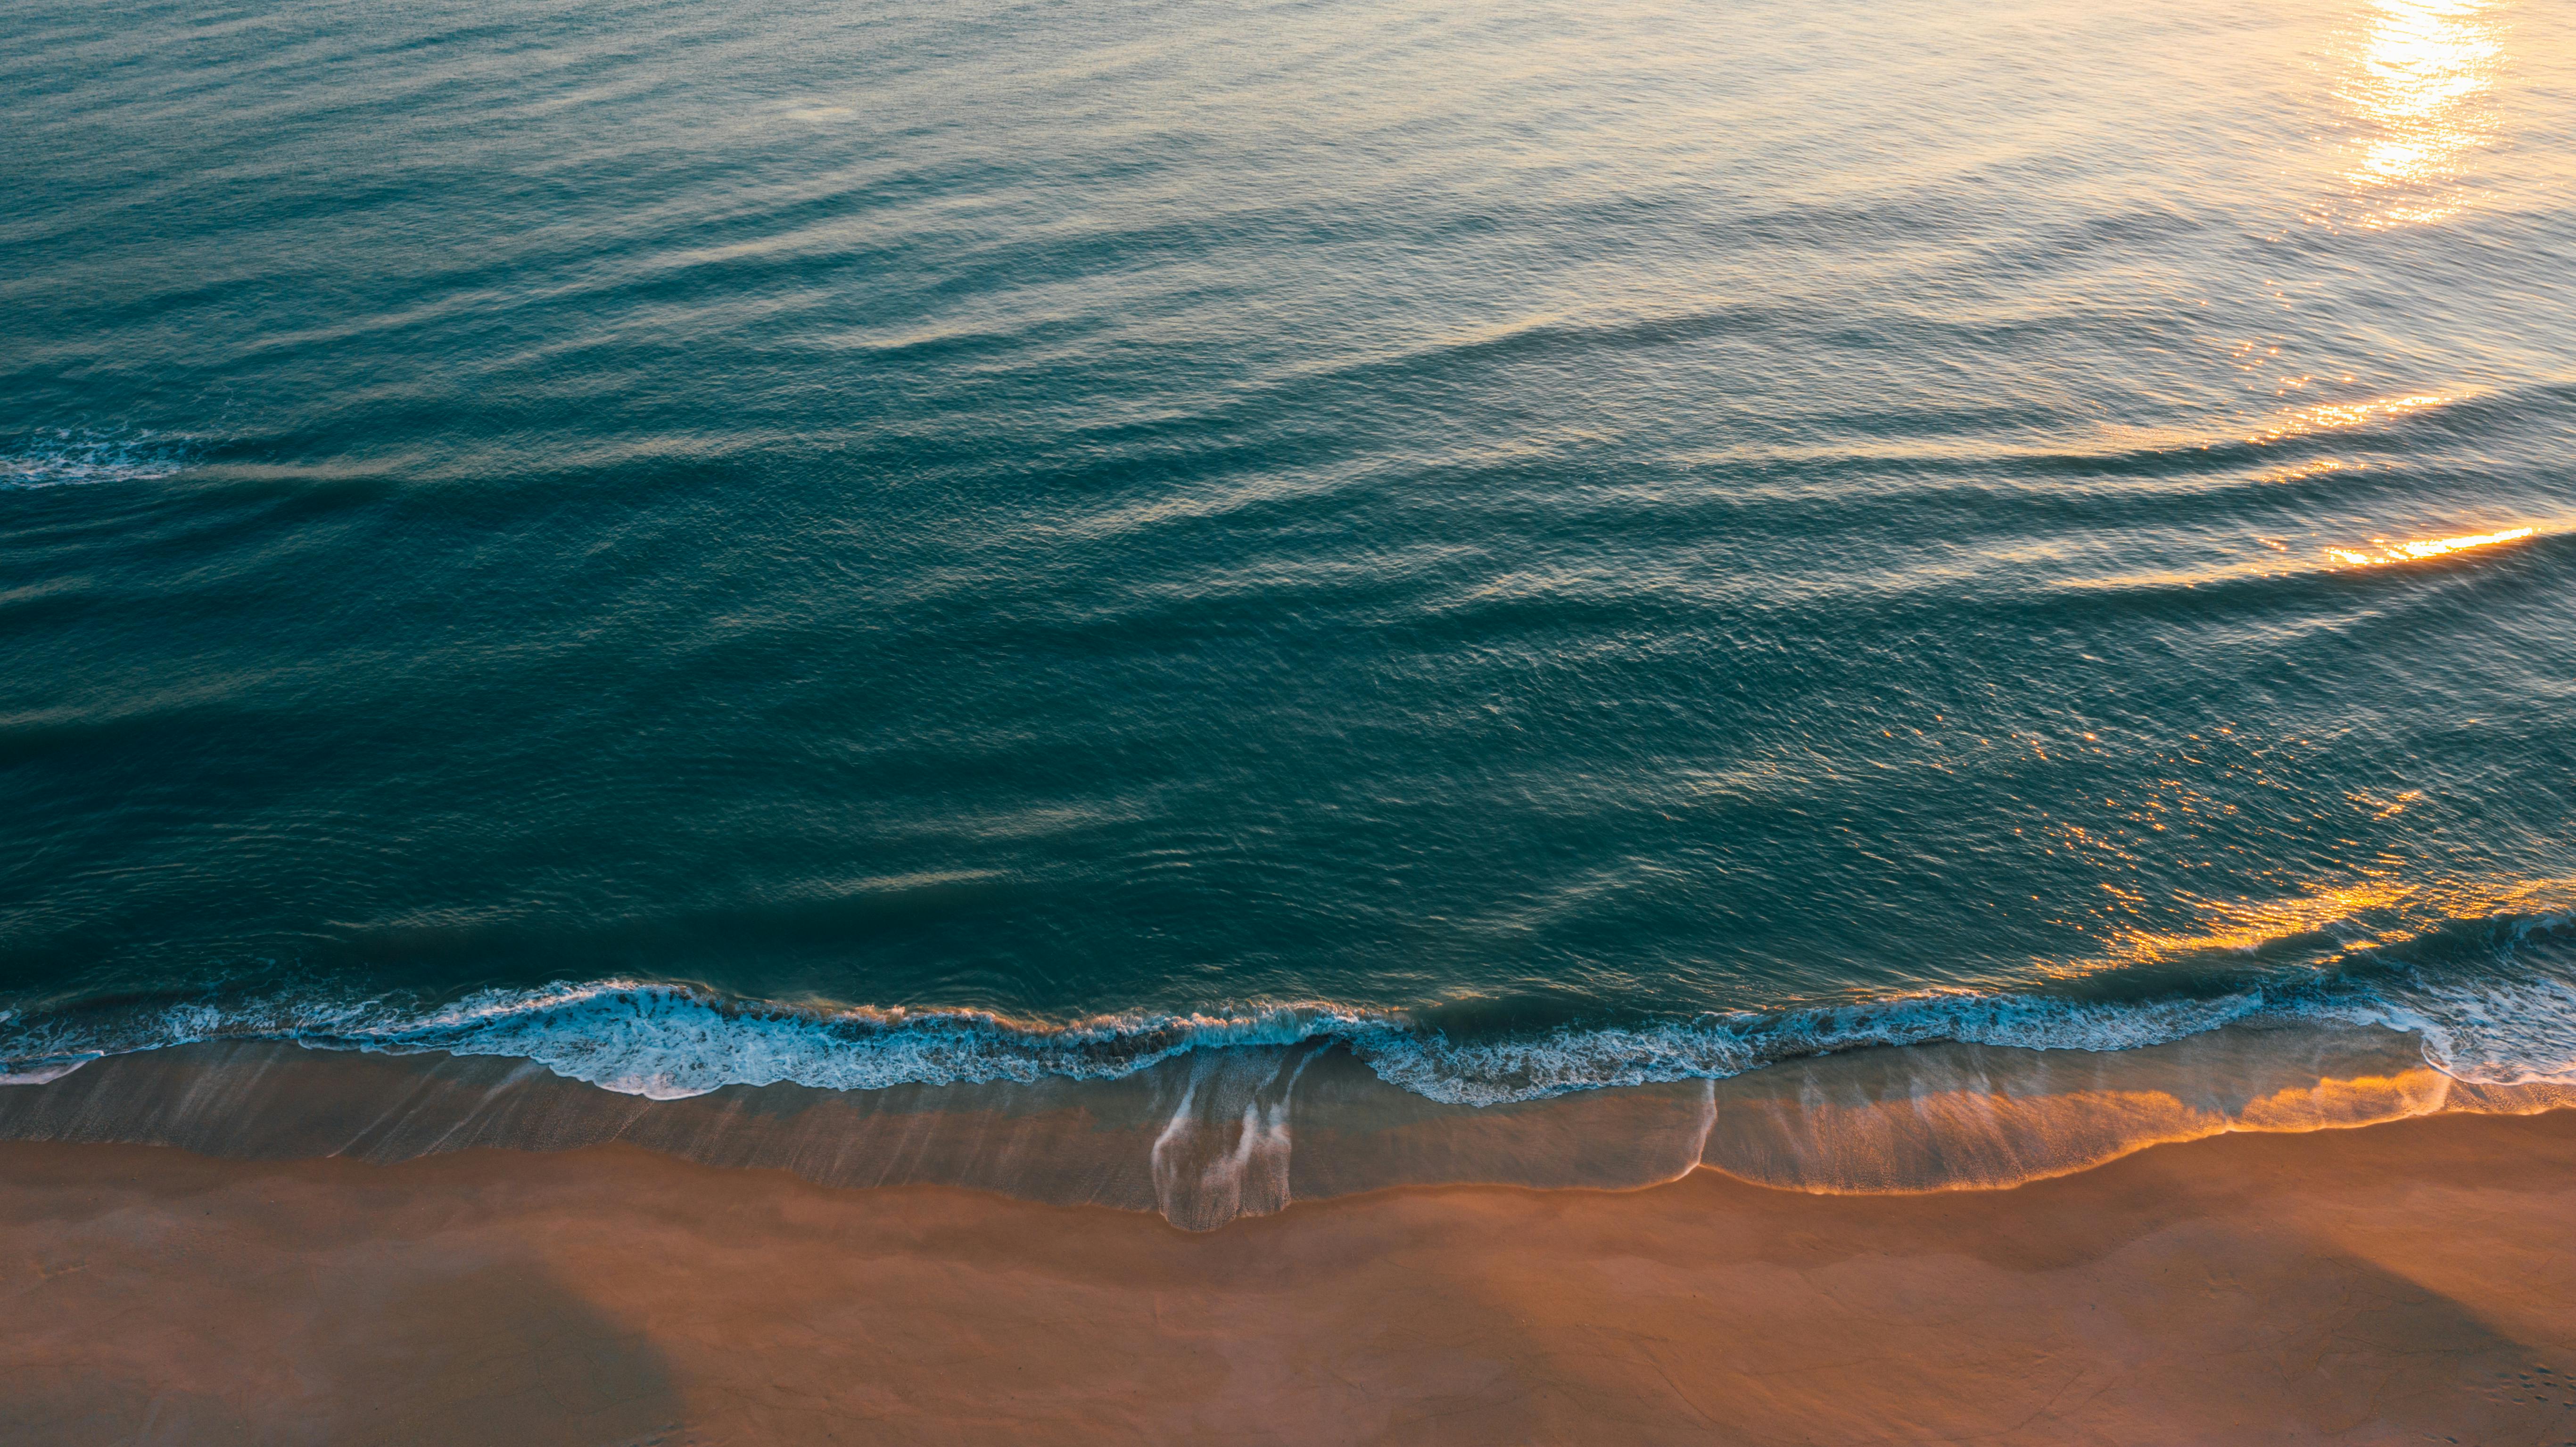 Soft Wave Of Blue Ocean On Sandy Beach